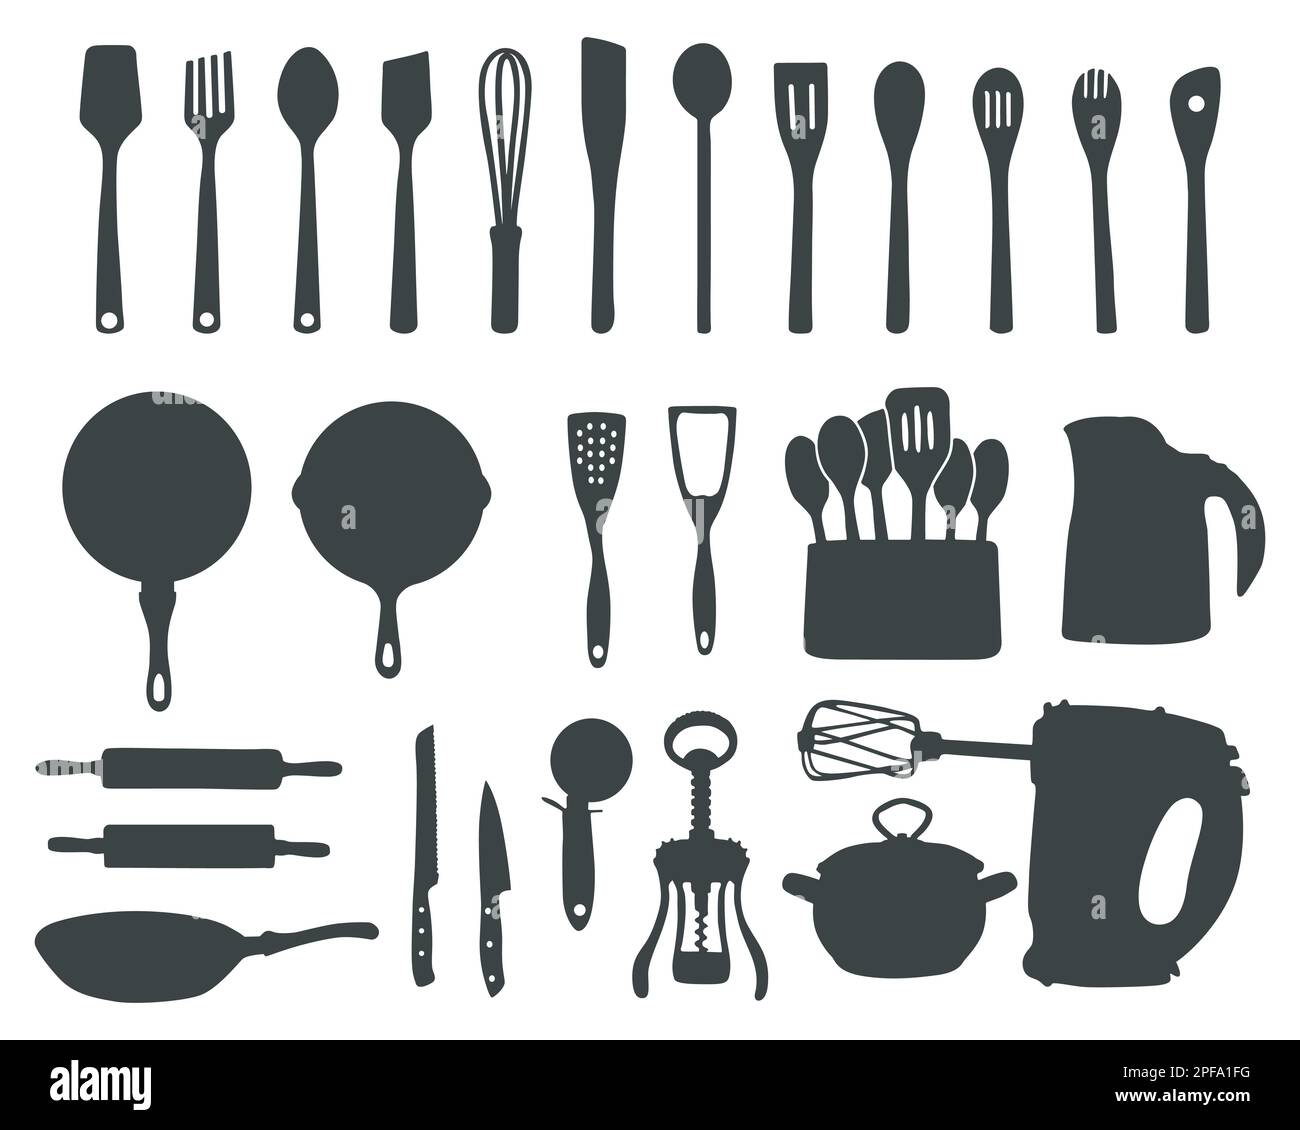 https://c8.alamy.com/comp/2PFA1FG/kitchen-tools-silhouette-kitchen-utensils-silhouette-cooking-tools-svg-2PFA1FG.jpg